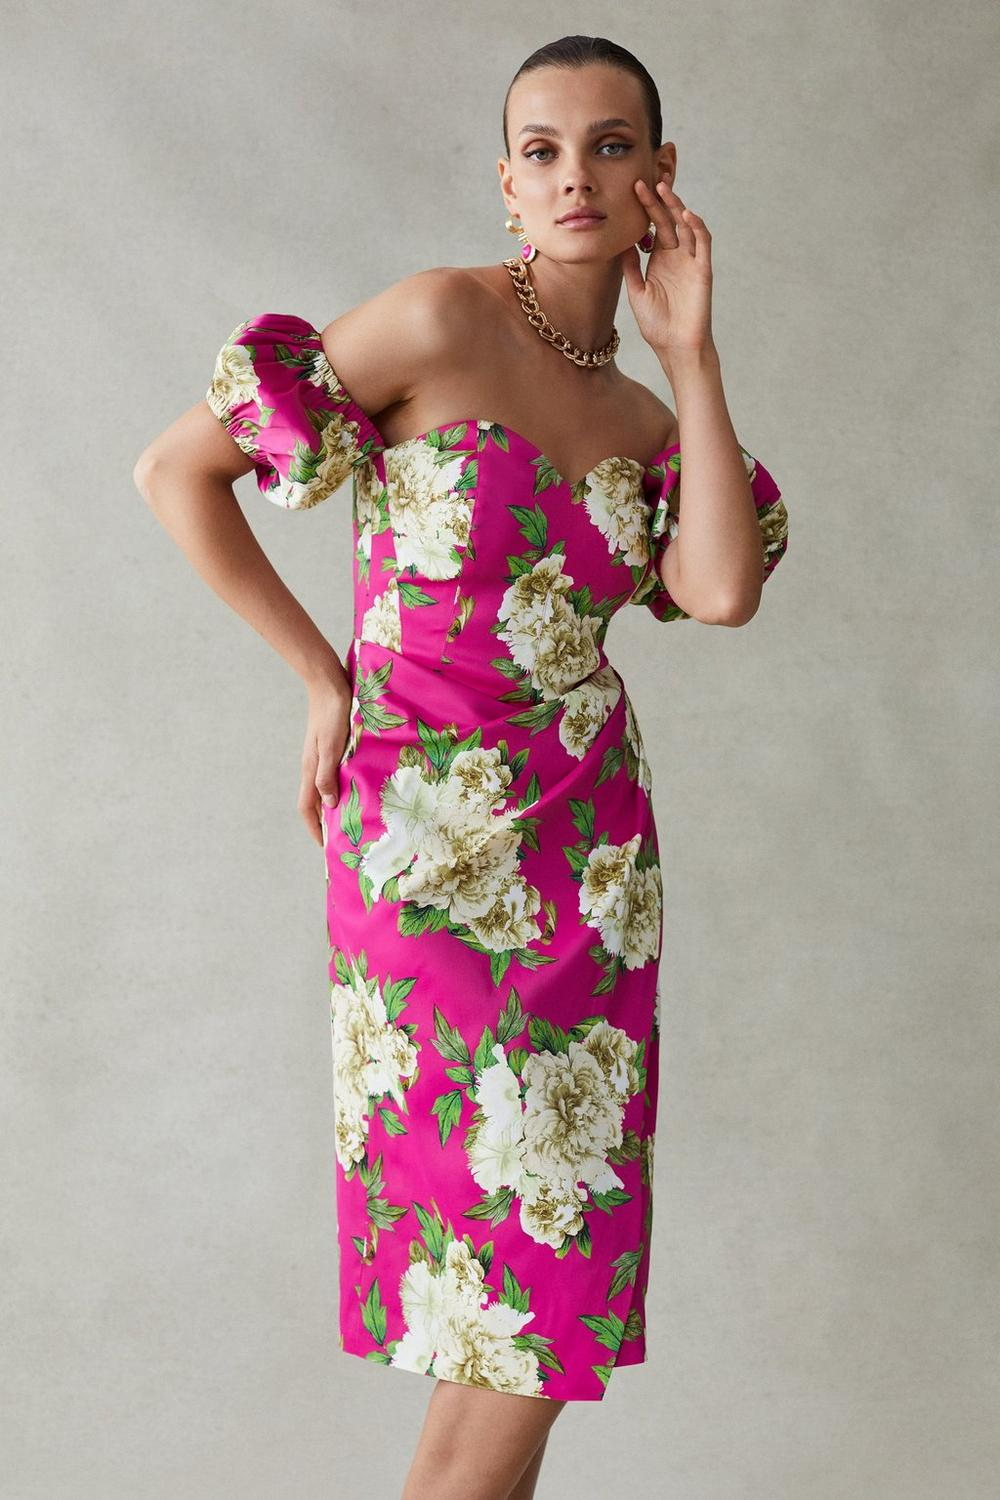 3.KAREN MILLEN Italian Signature Stretch Rose Print Bardot Midi Dress €285, 